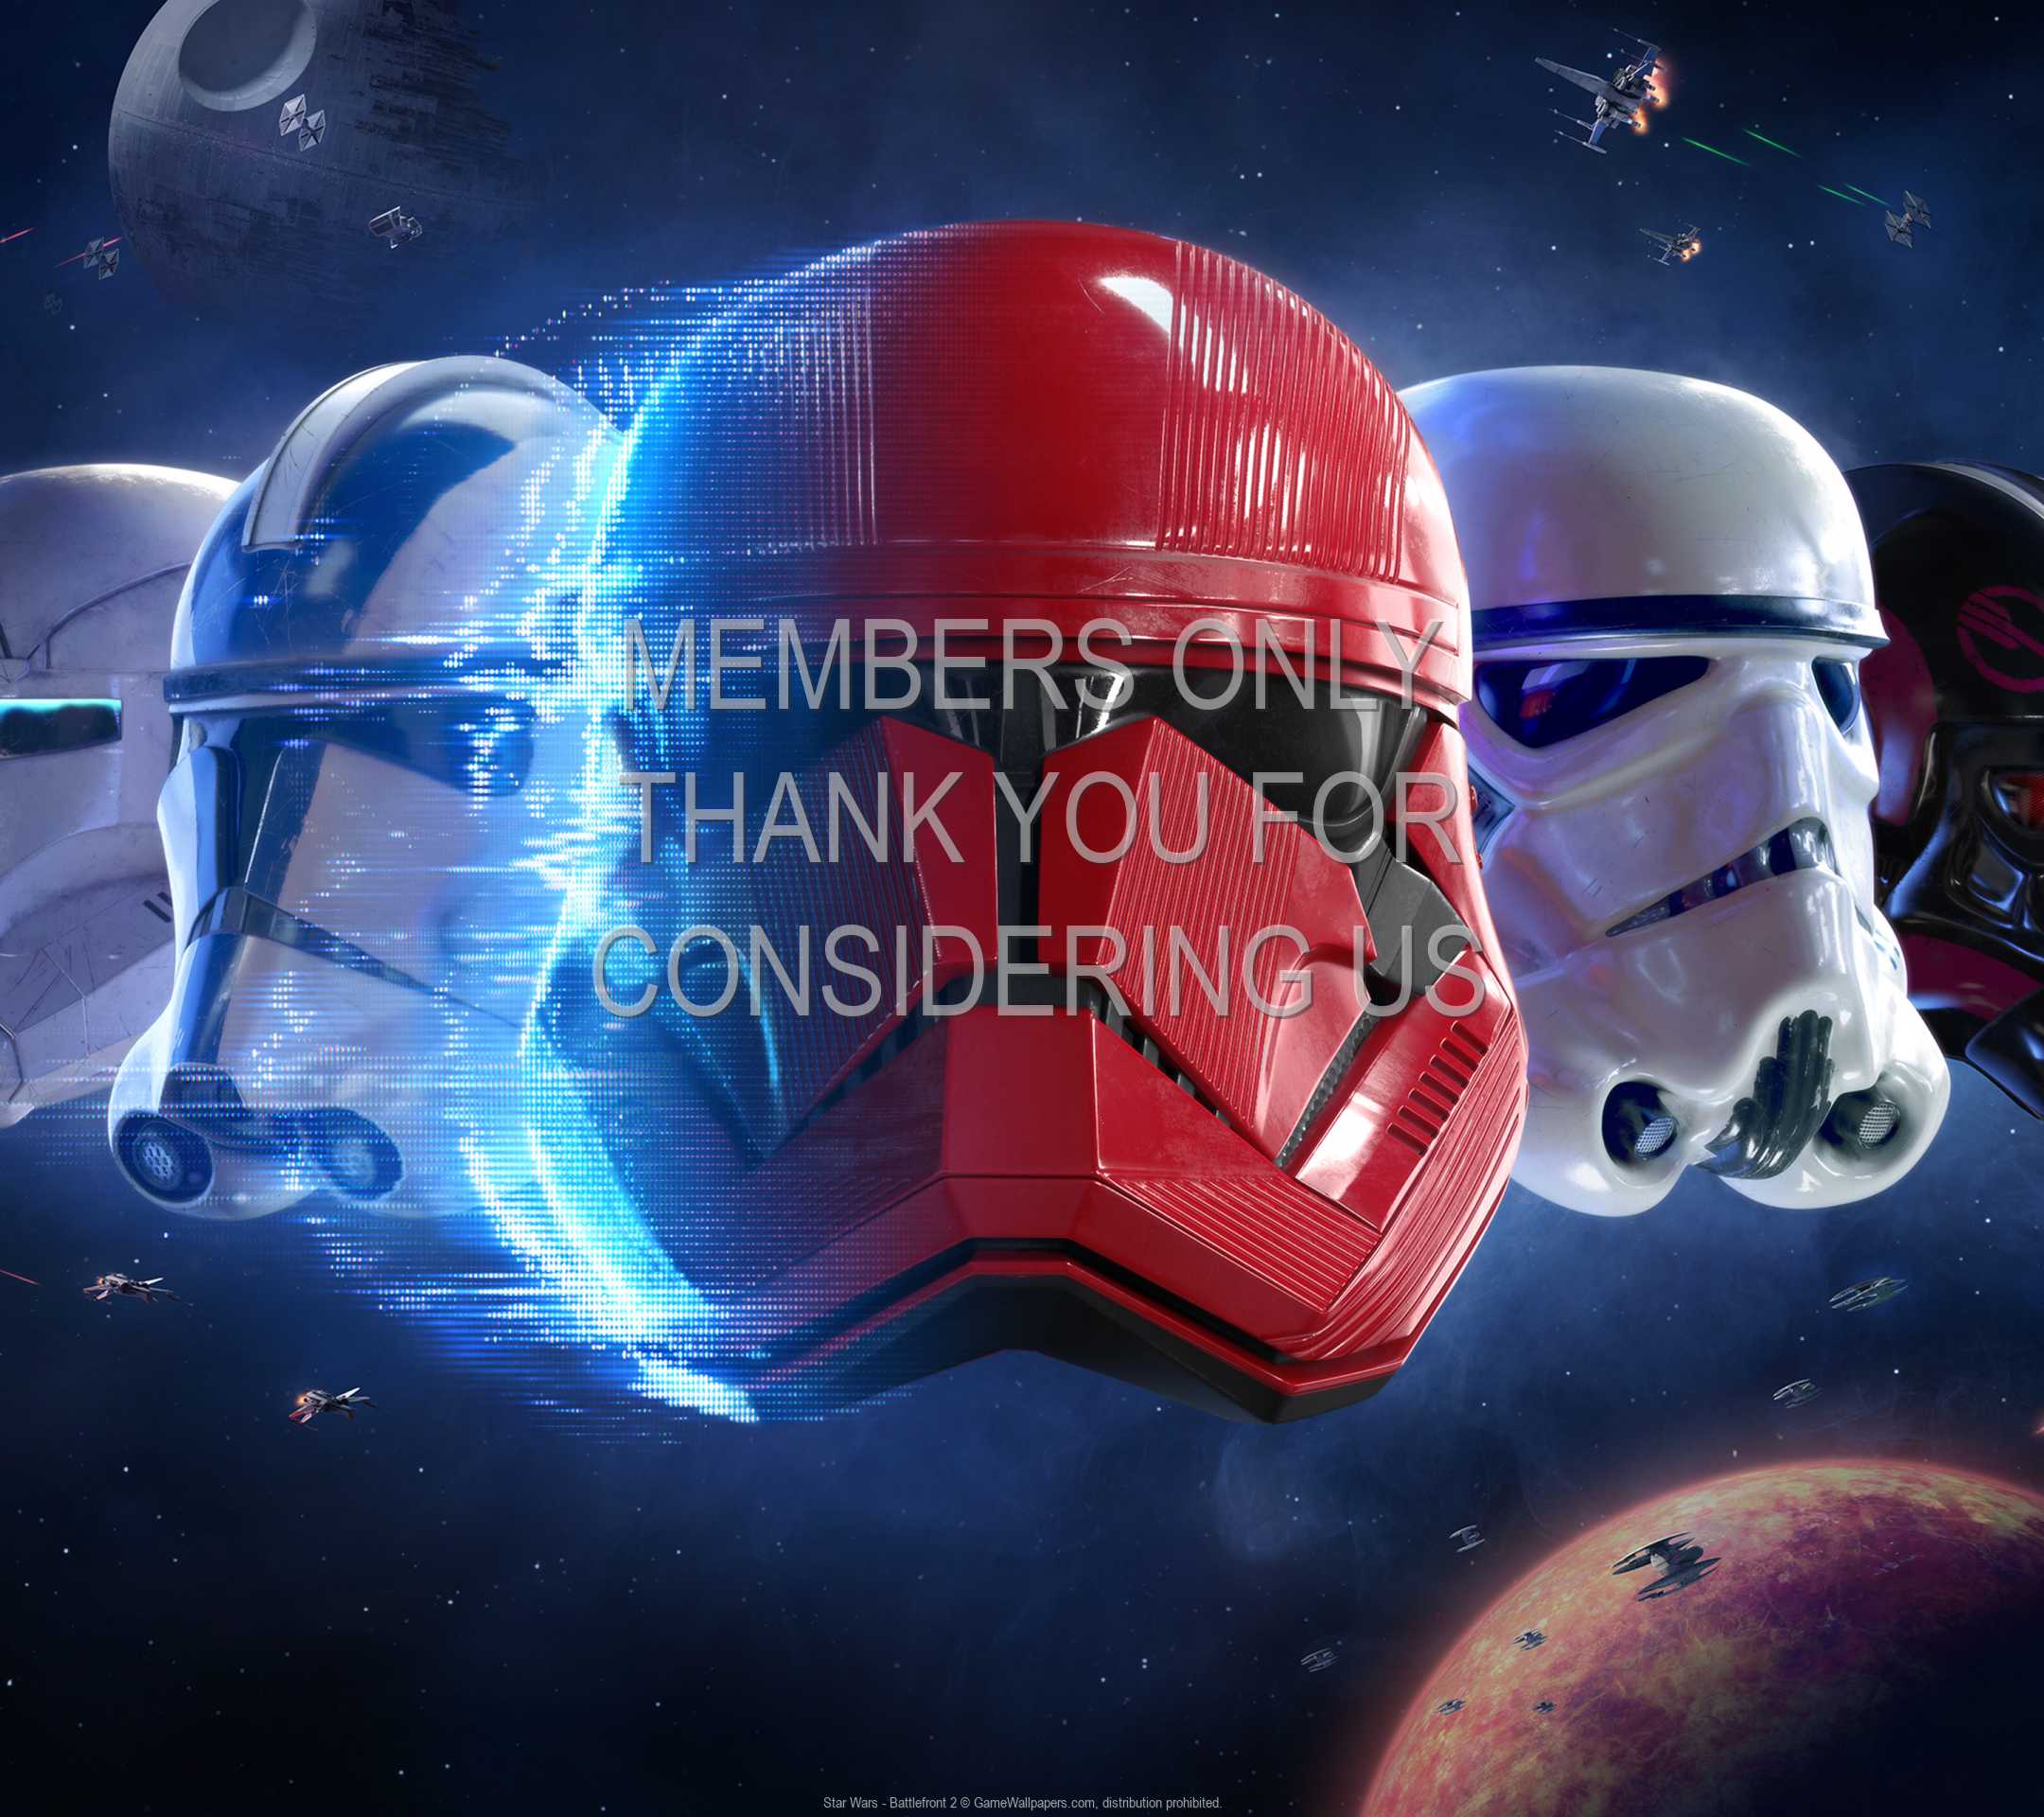 Star Wars - Battlefront 2 1080p%20Horizontal Mobile wallpaper or background 06